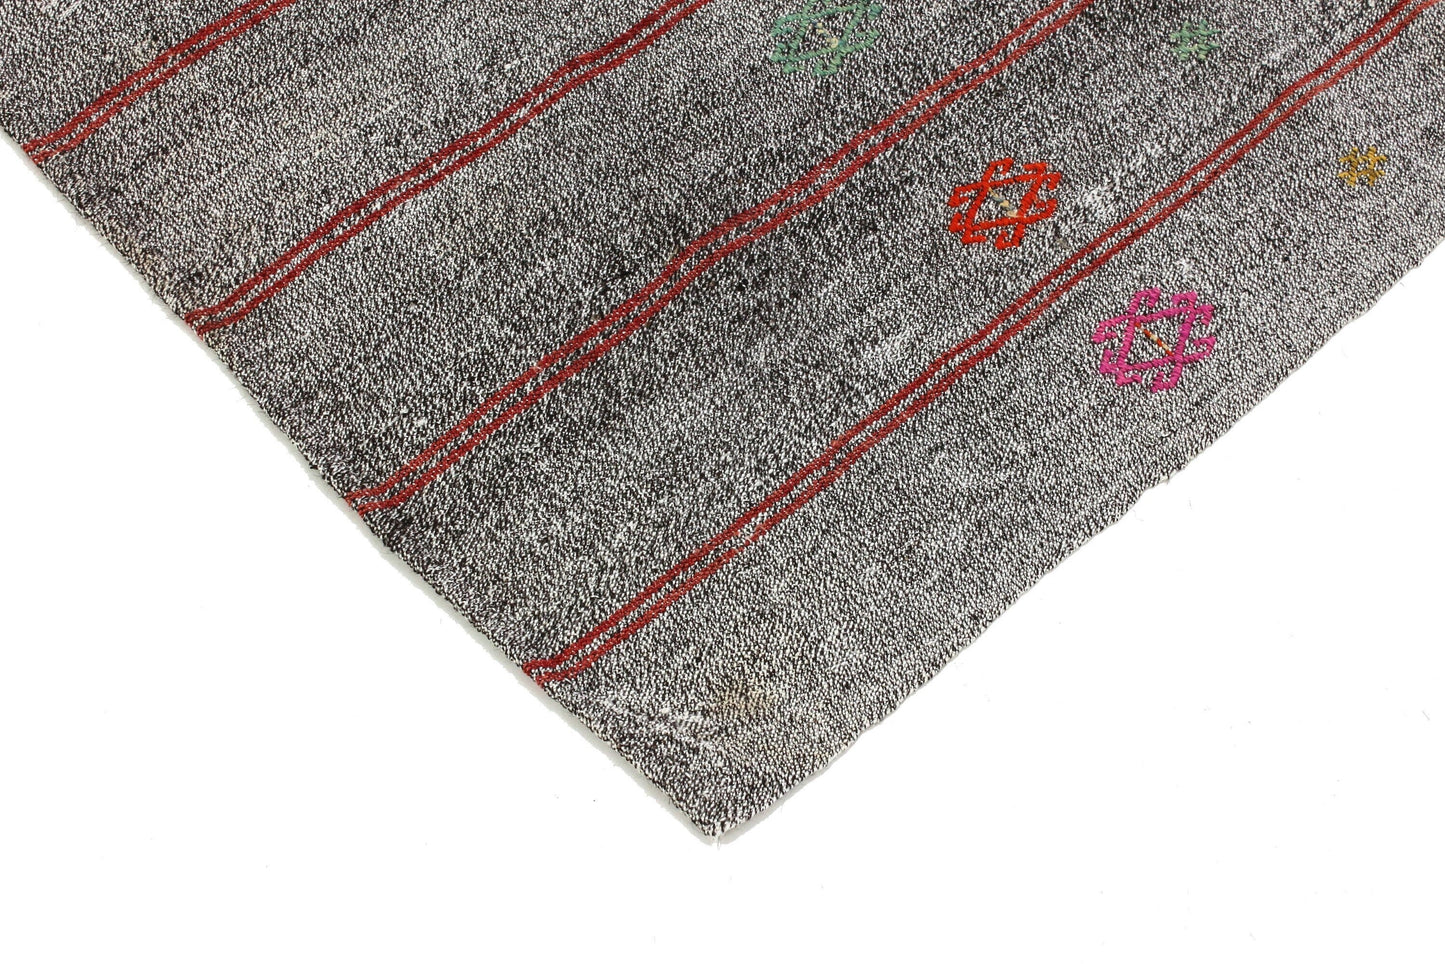 Vintage Turkish Kilim Rug, Gray Rug, Goat Hair Rug, Kilim Rug 6x8, Rug Kilim, Area Kilim Rug, Handmade Kilim Rug, Contemporary Decor, 5558